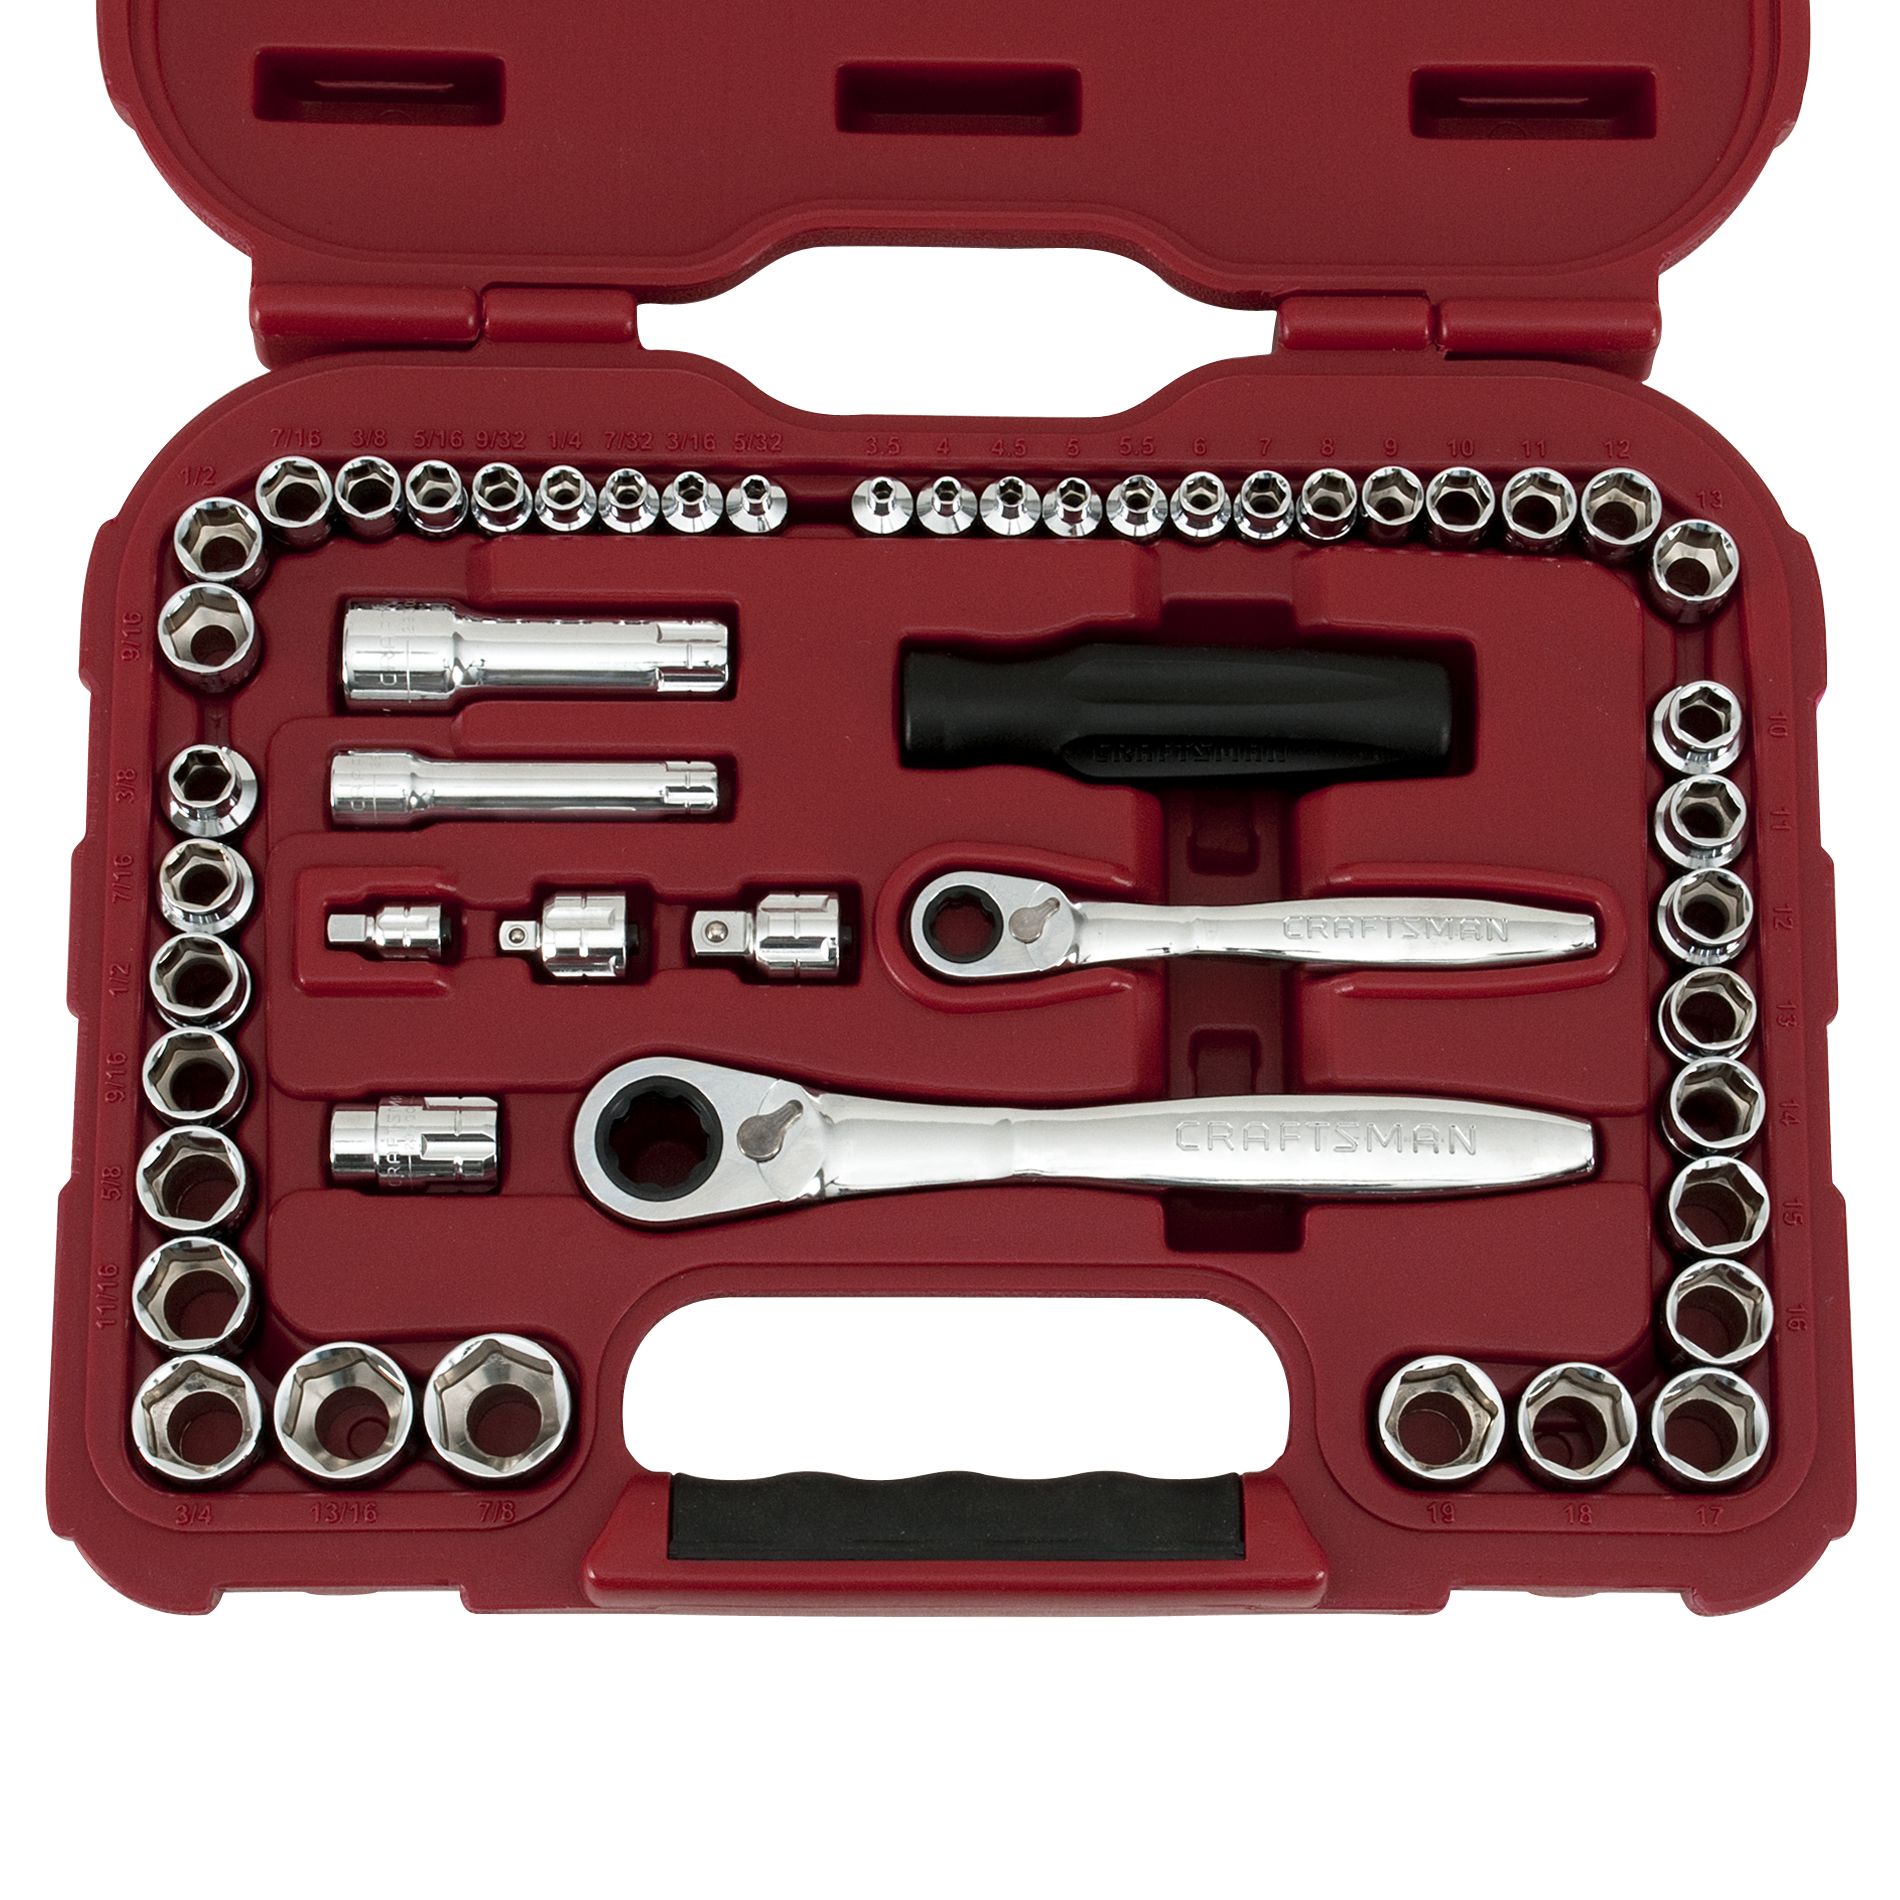 Craftsman 85 Piece Universal Max Axess Mechanics Tool Set w/ Carrying Case 